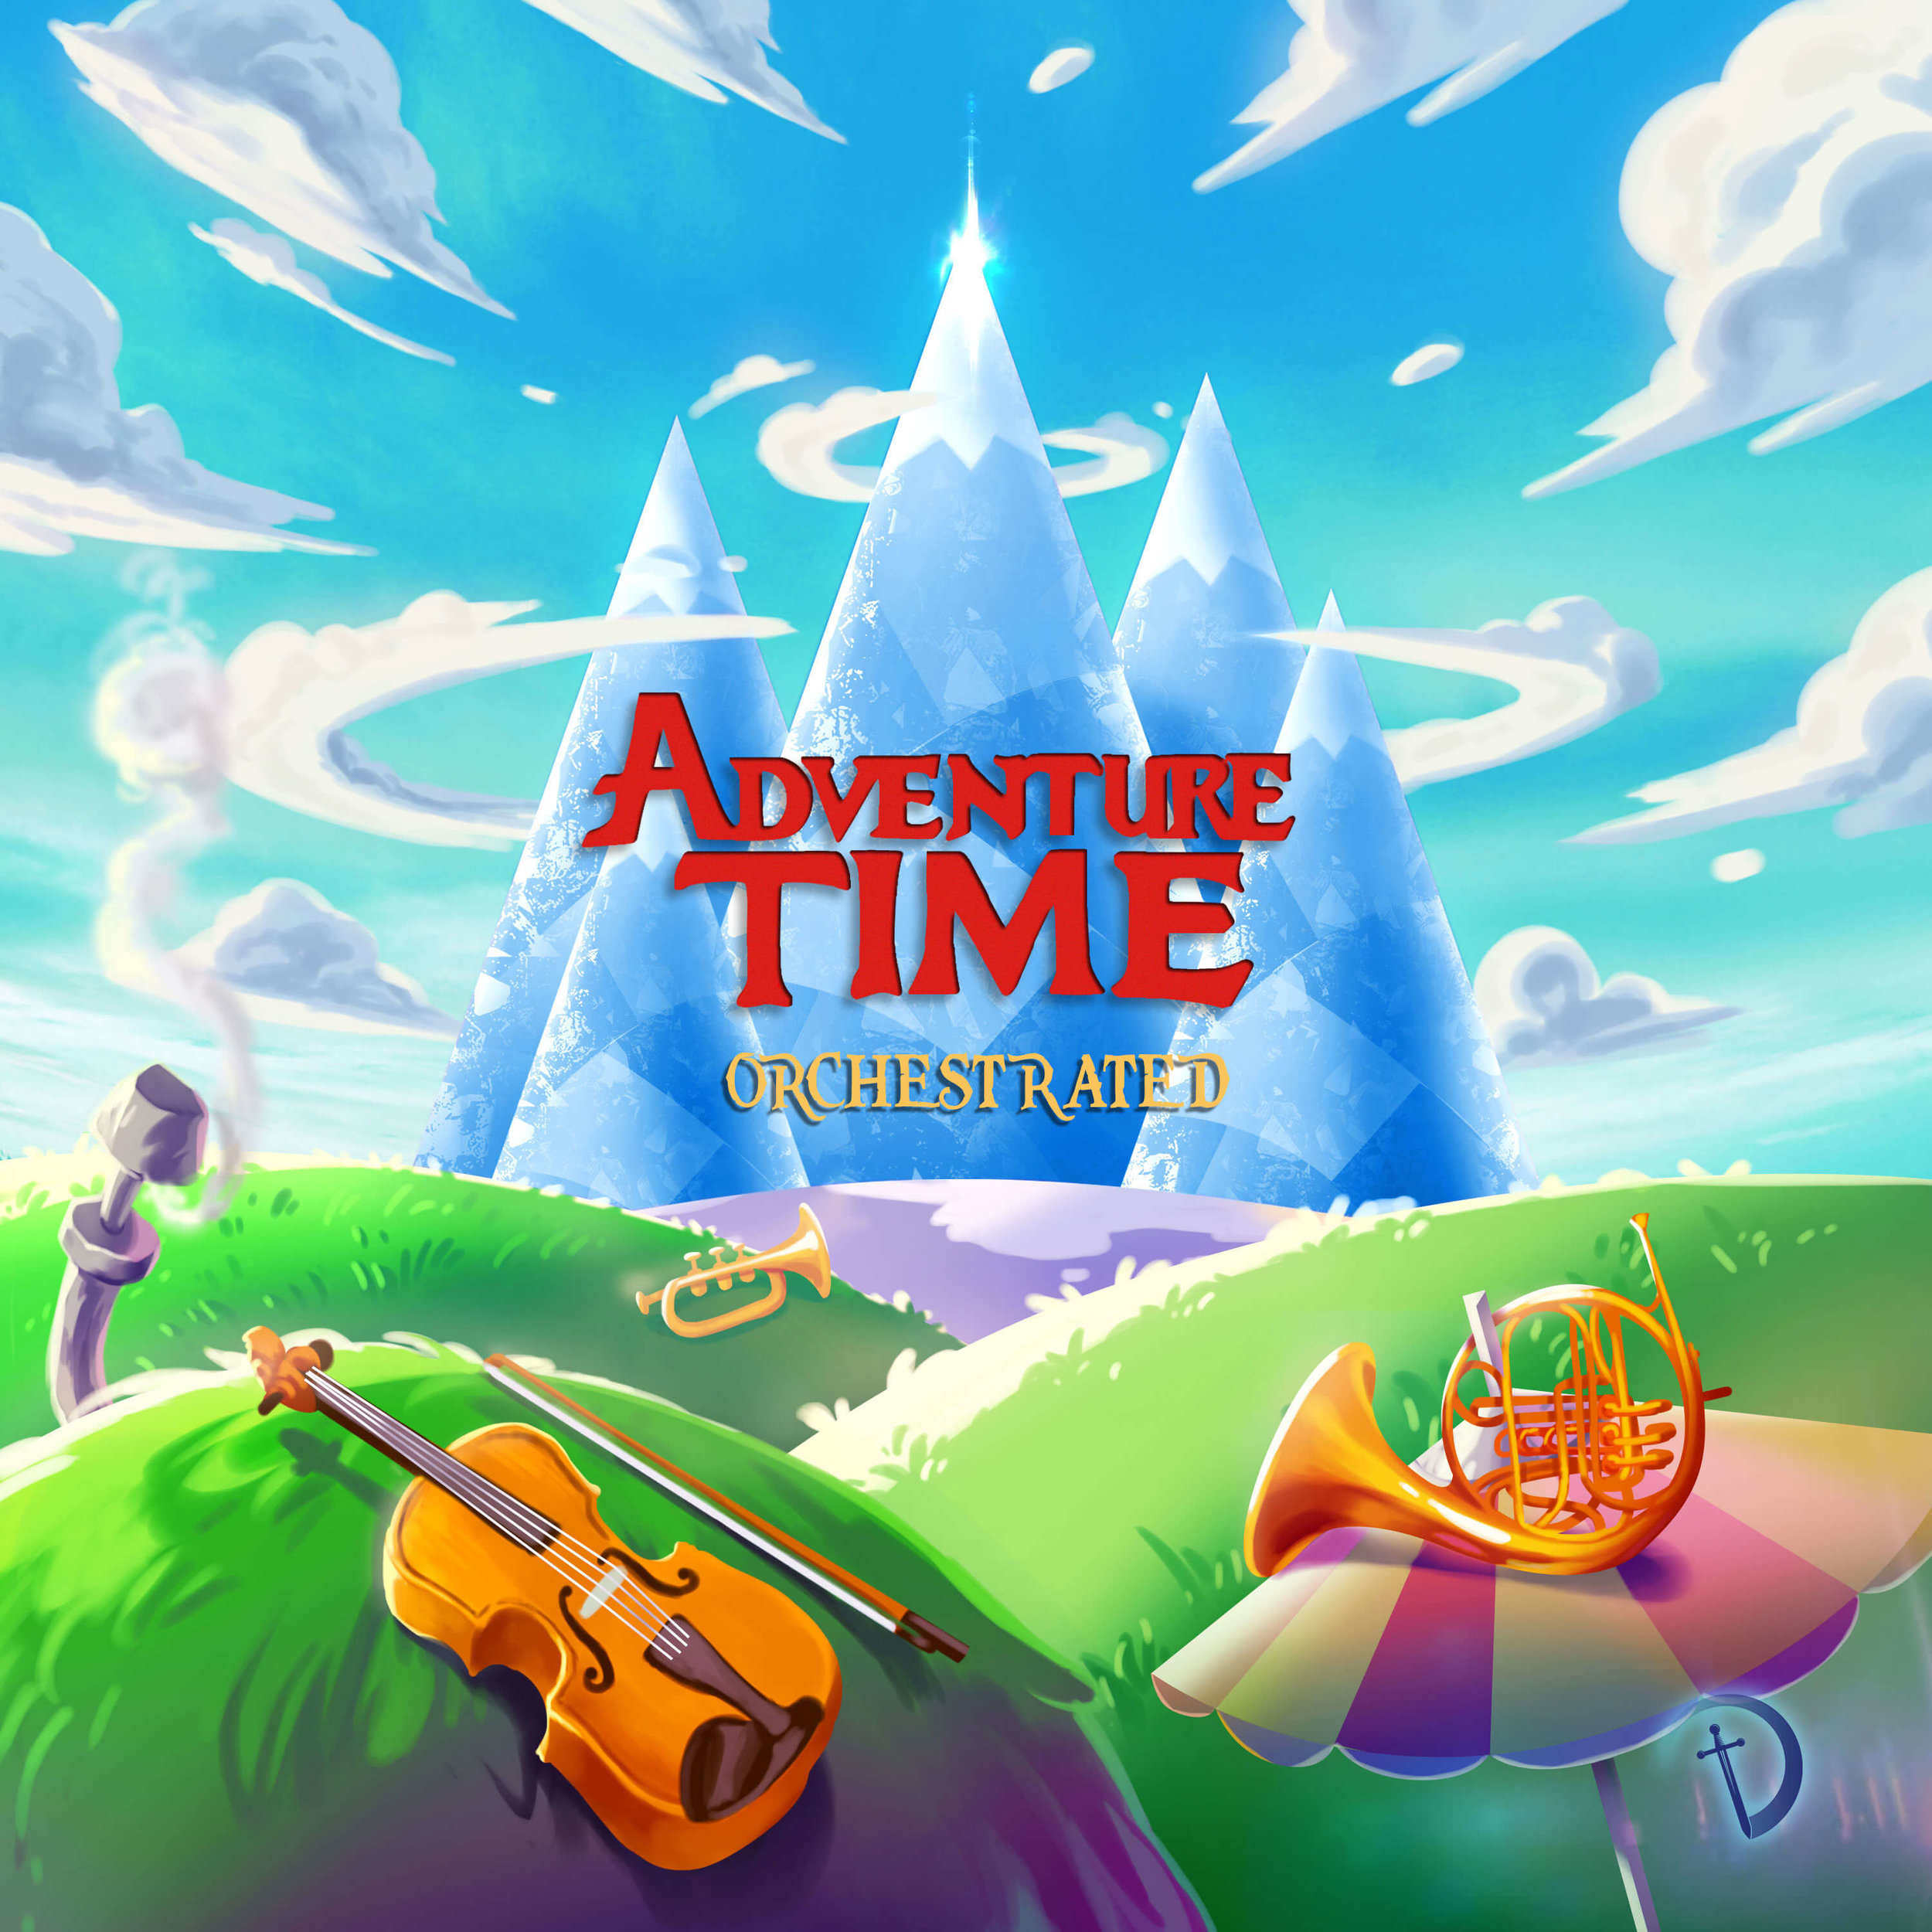 Adventure-Time-Album-Cover-final.jpg